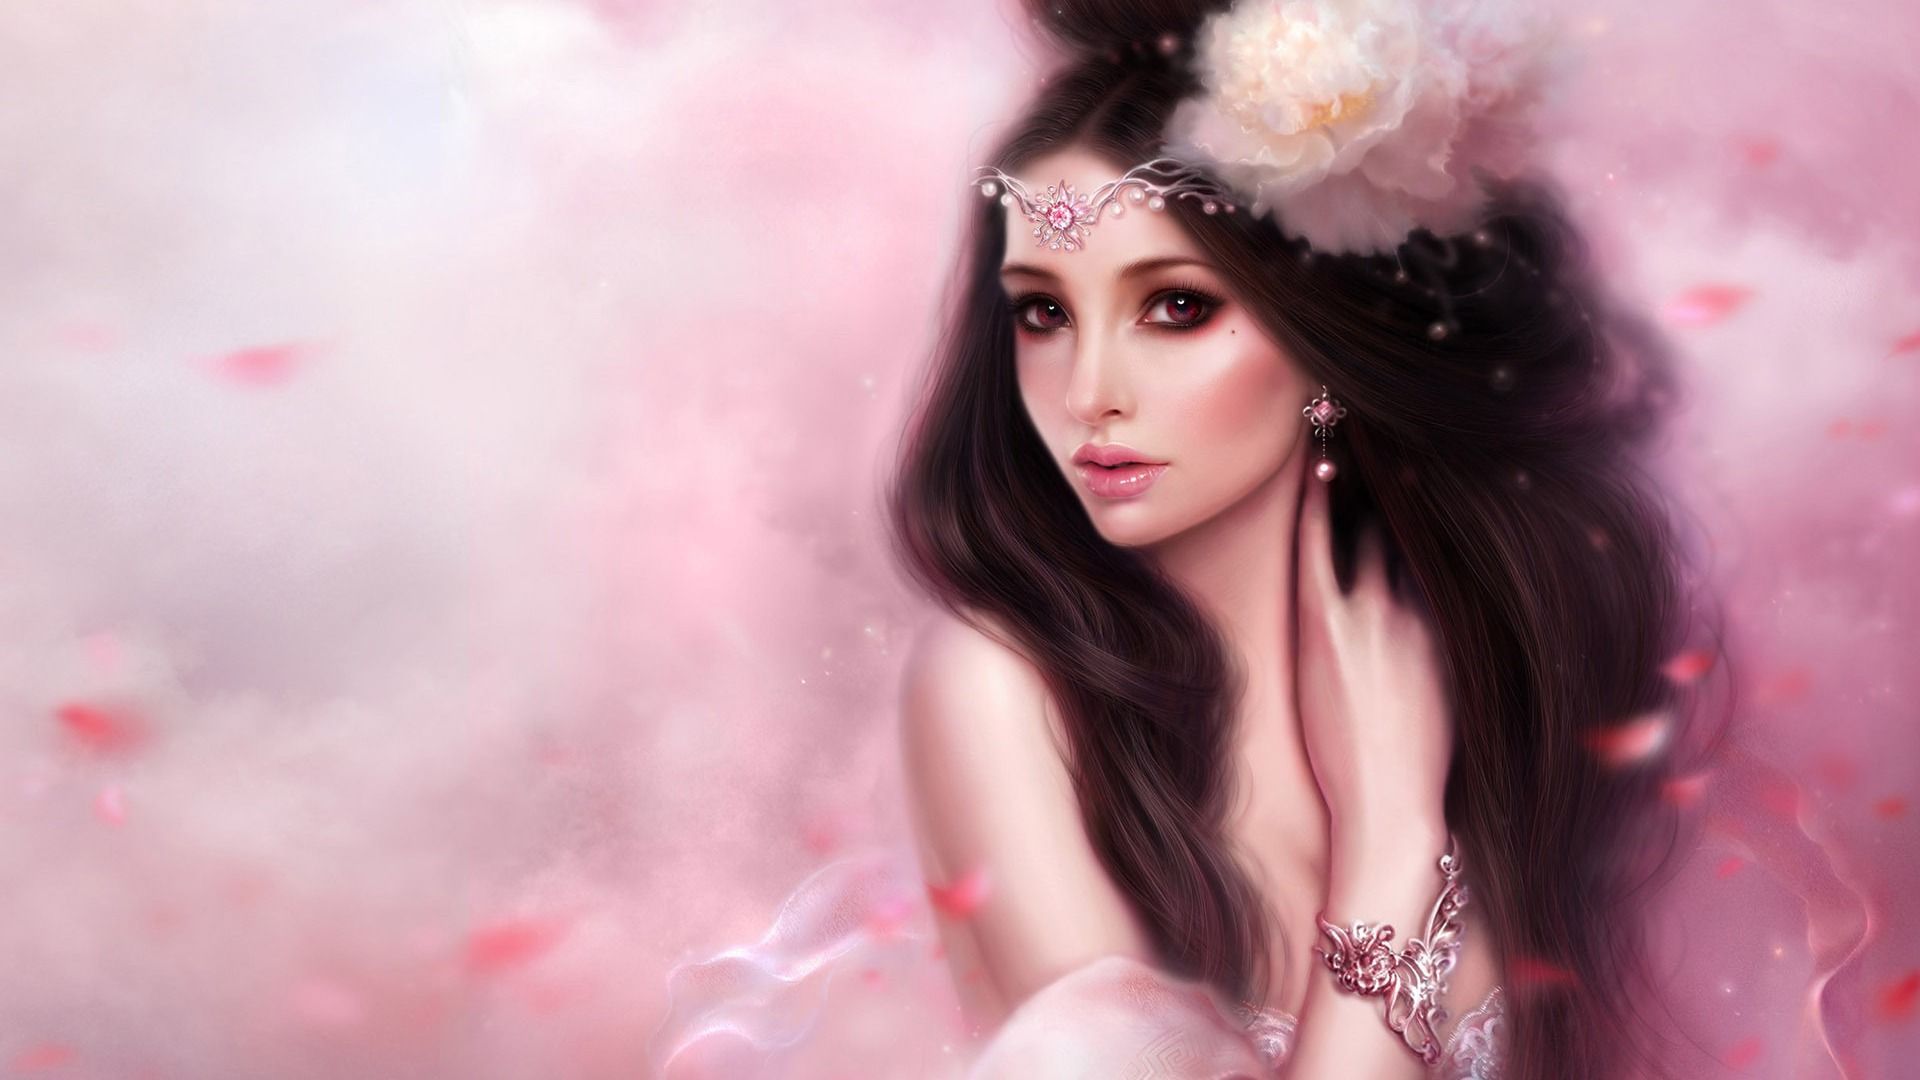 Beautiful Princess wallpaper HD free. Fantasy art women